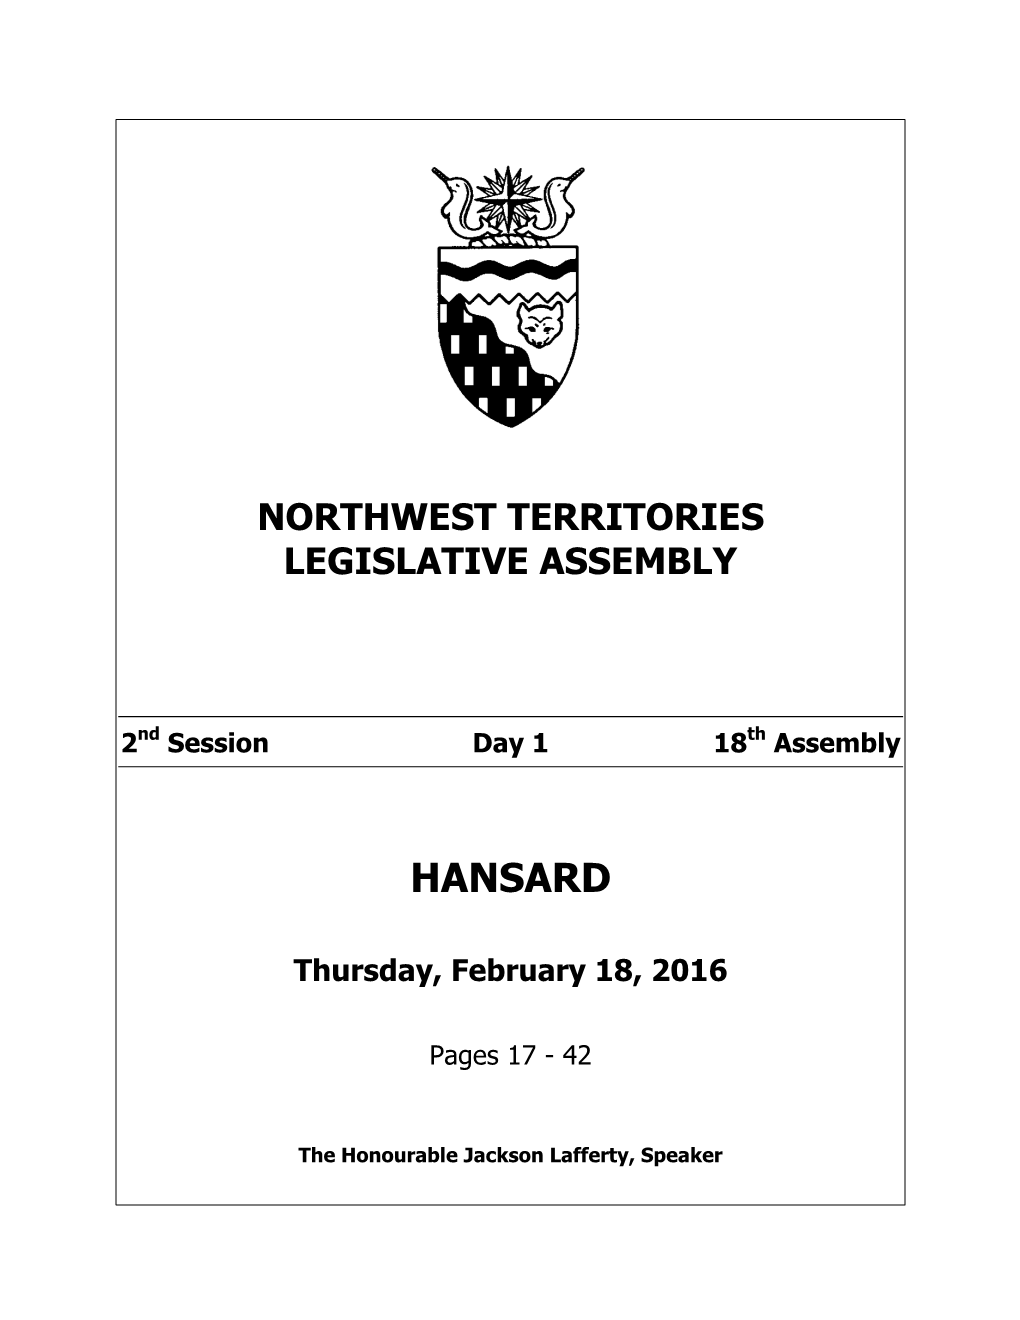 Hansard of the Legislative Assembly of the Northwest Territories; For